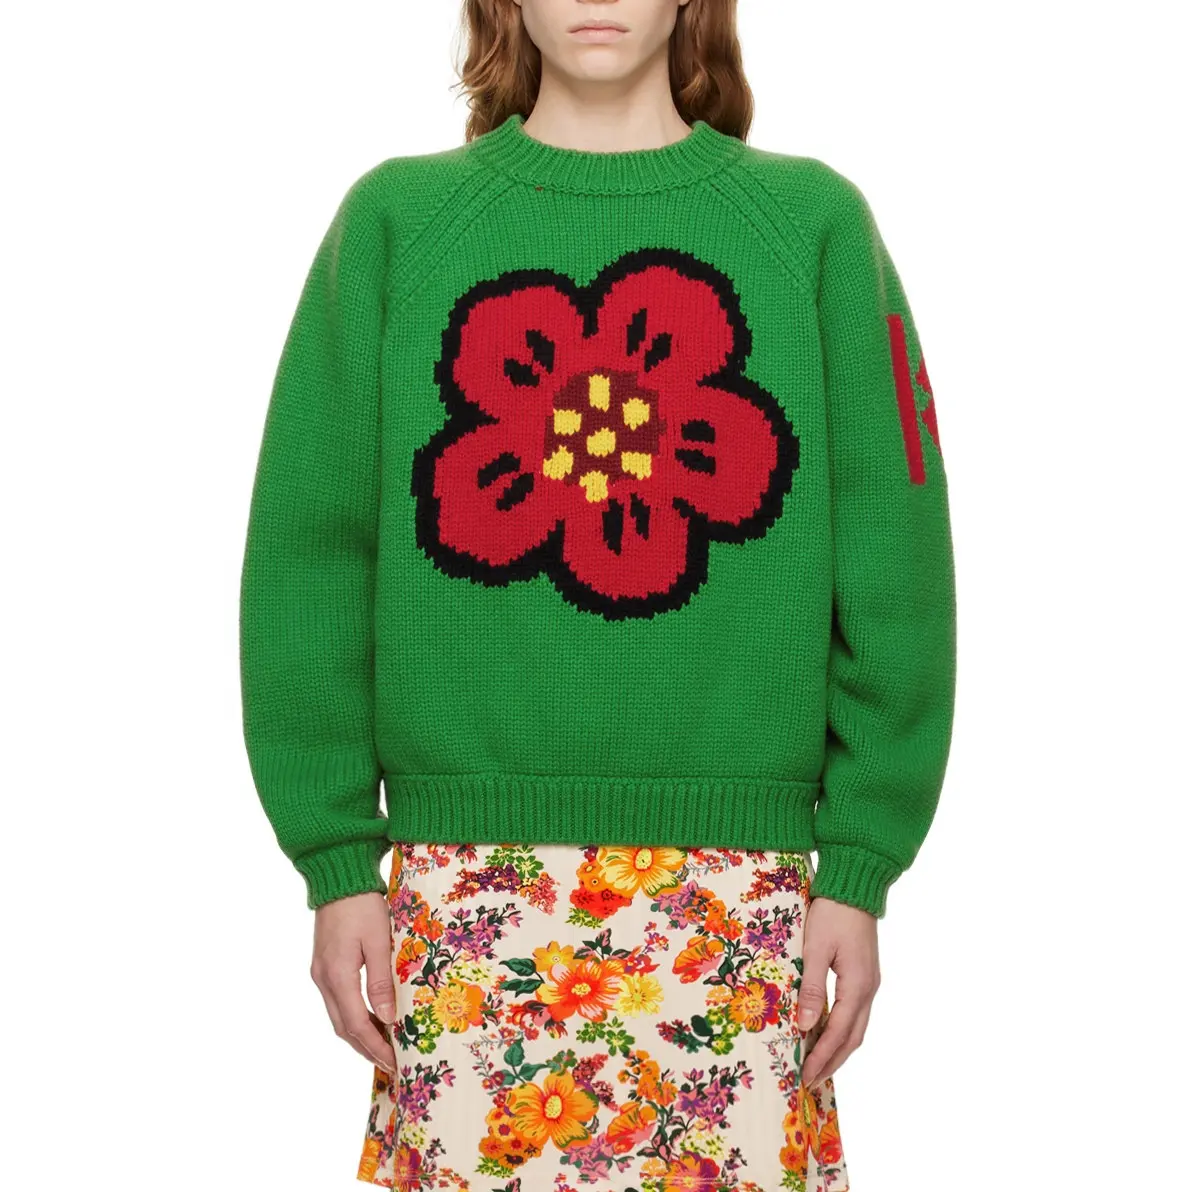 OEM & ODM Factory Hersteller Großhandel bedruckte Wolle Pullover Blume Jacquard Strick Pullover Muster Stickerei Pullover Frauen